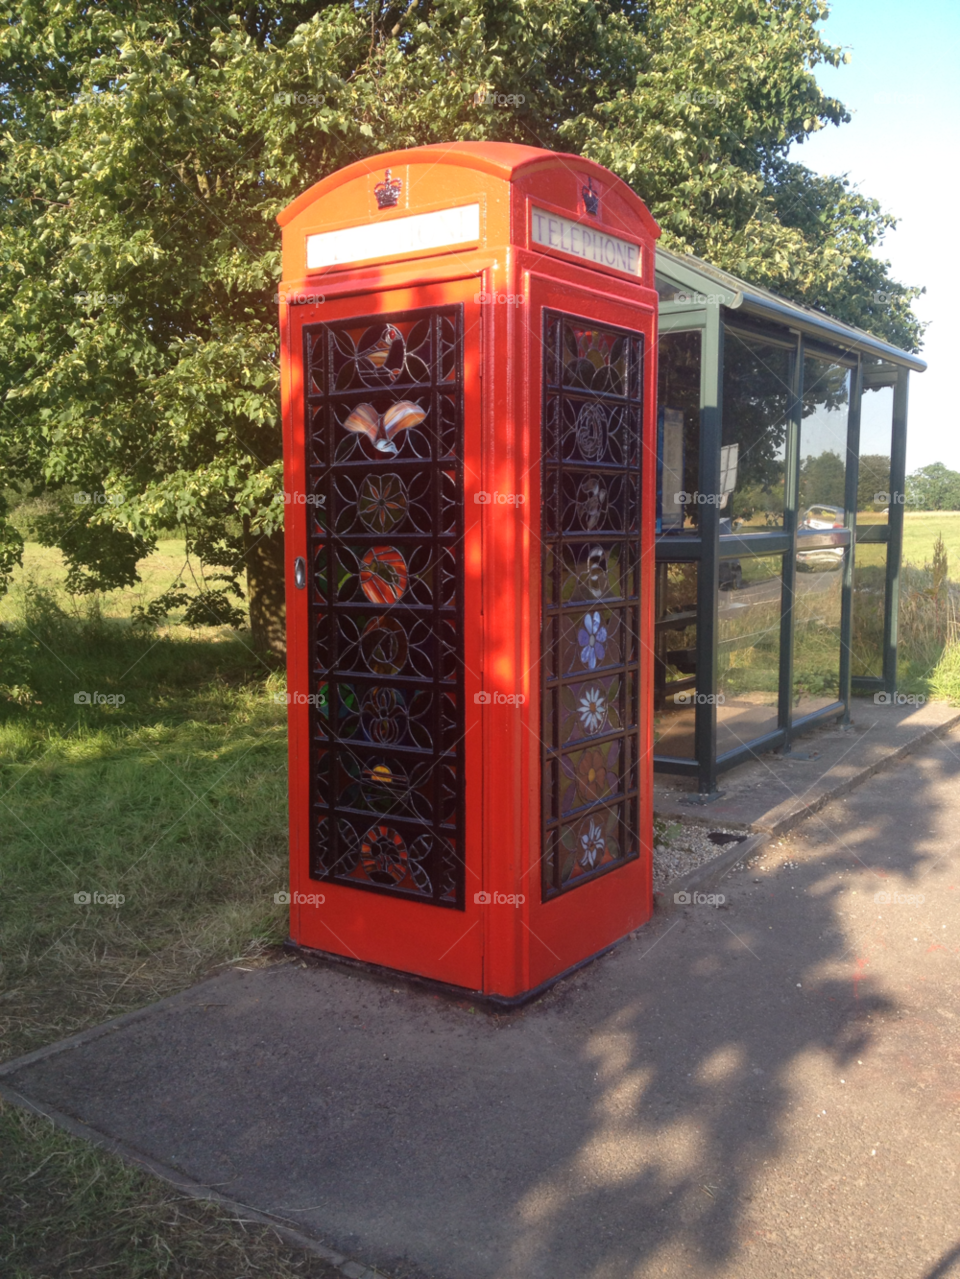 suffolk telephone box phone box red phone box by dawsostephen